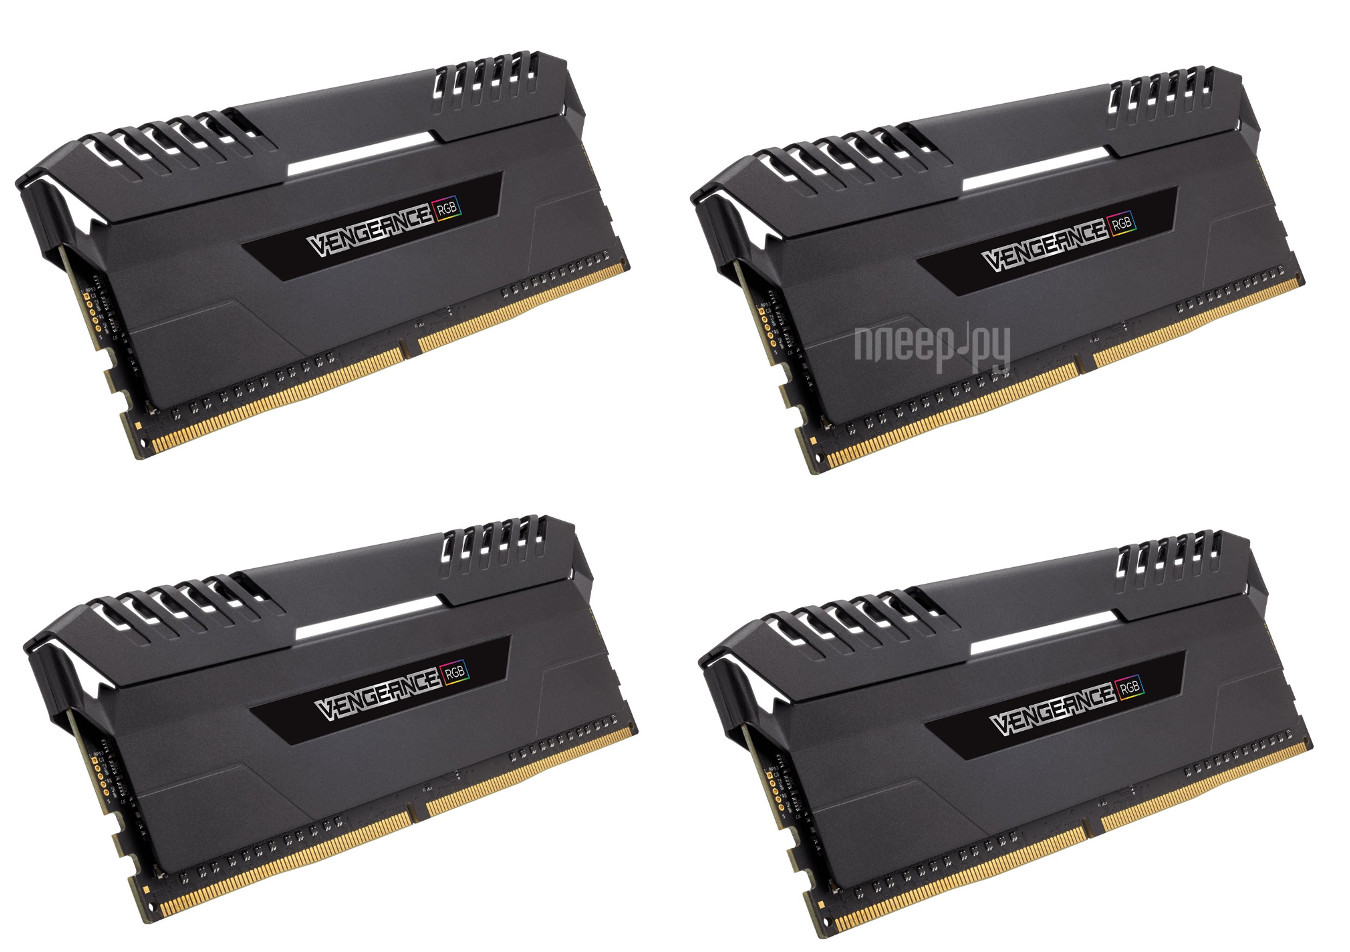   Corsair Vengeance RGB DDR4 DIMM 3466MHz PC4-27700 CL16 - 32Gb KIT (4x8Gb) CMR32GX4M4C3466C16  36047 